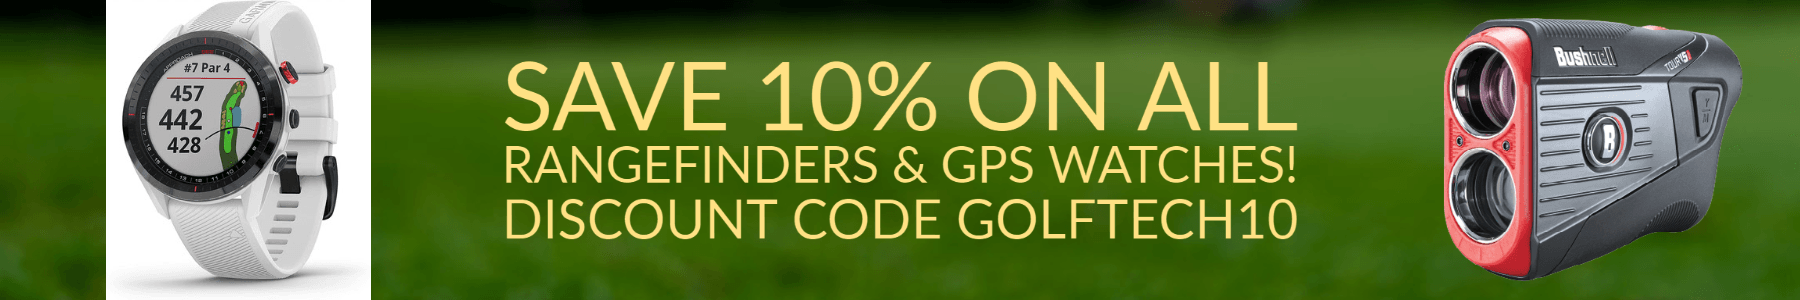 Rangefinders & GPS Pacific Golf Warehouse 